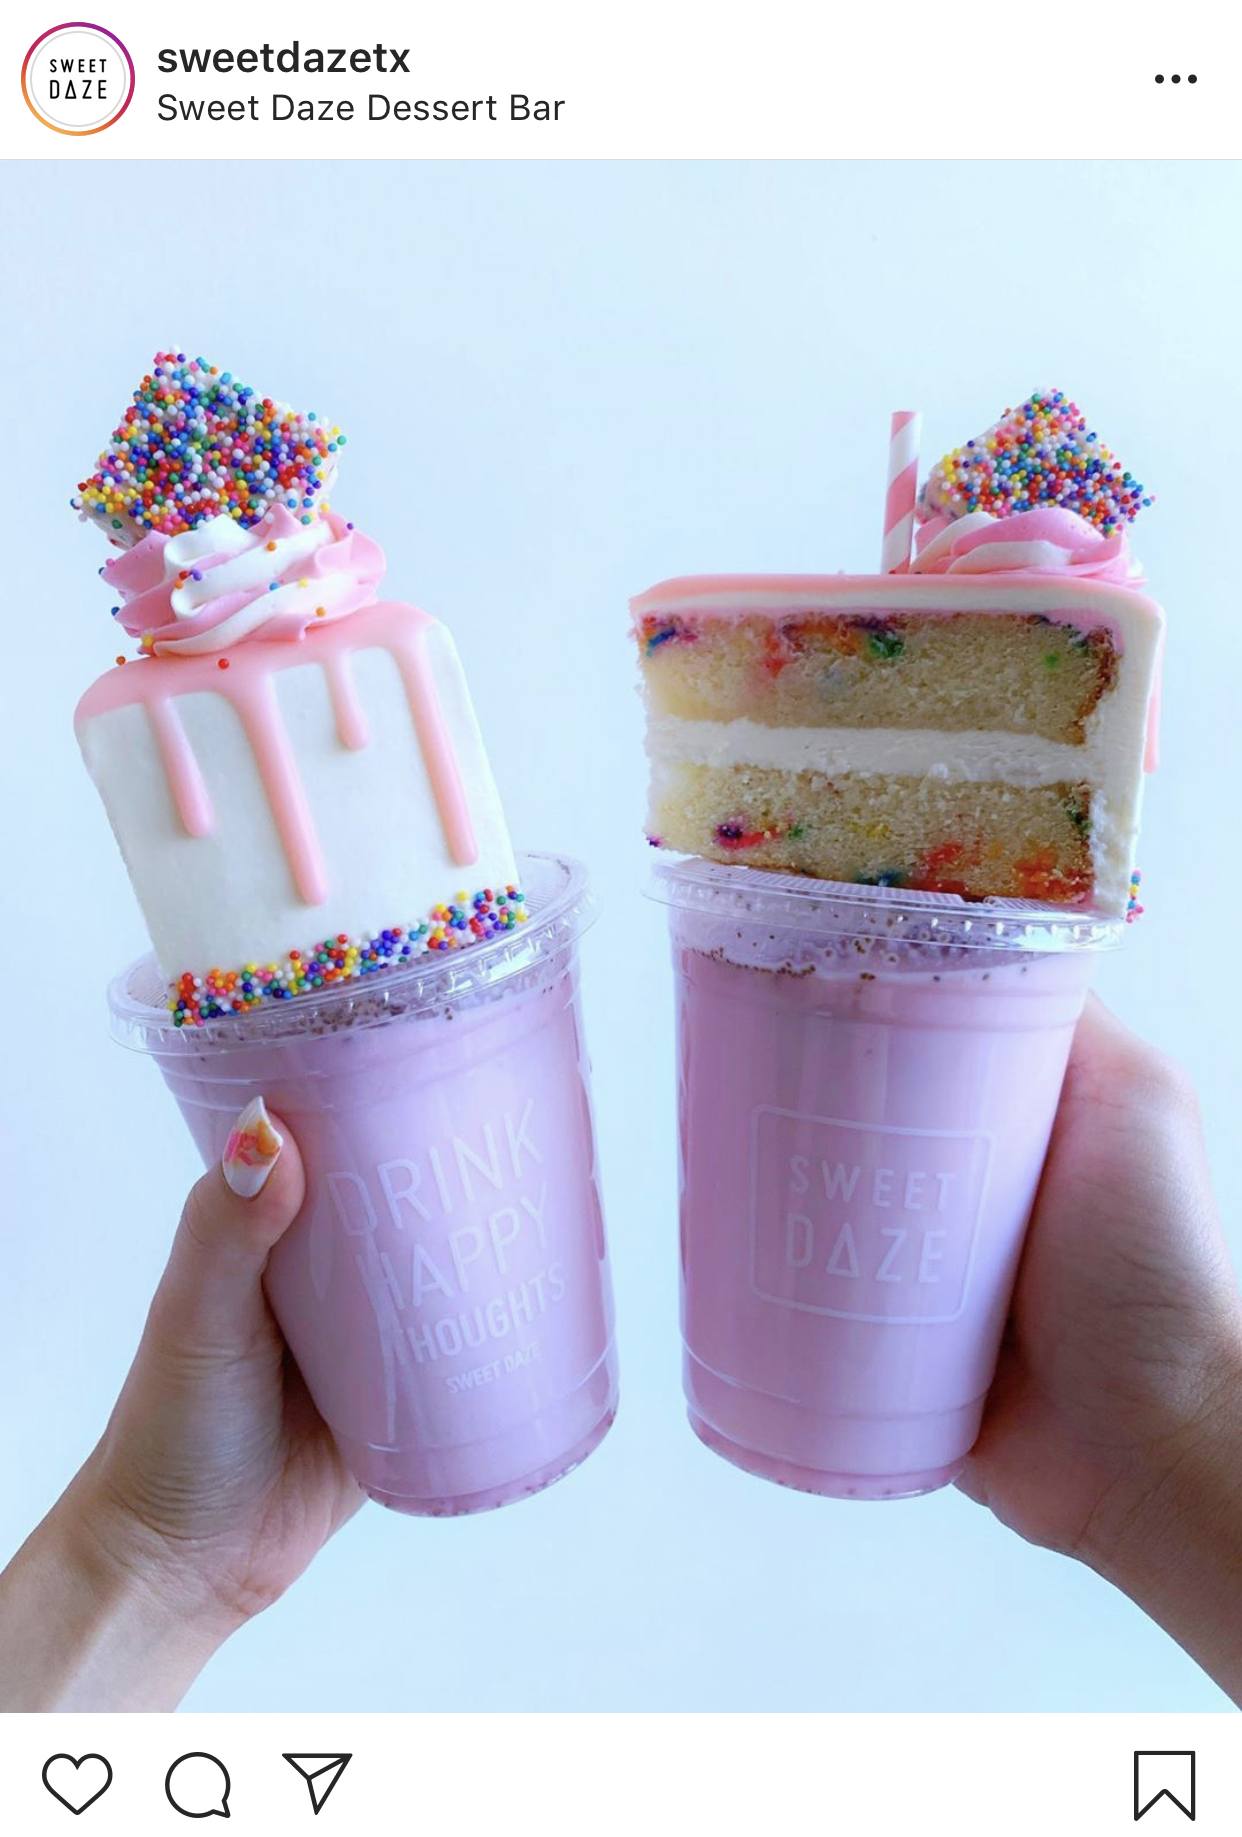 sweet daze dessert bar προφίλ instagram